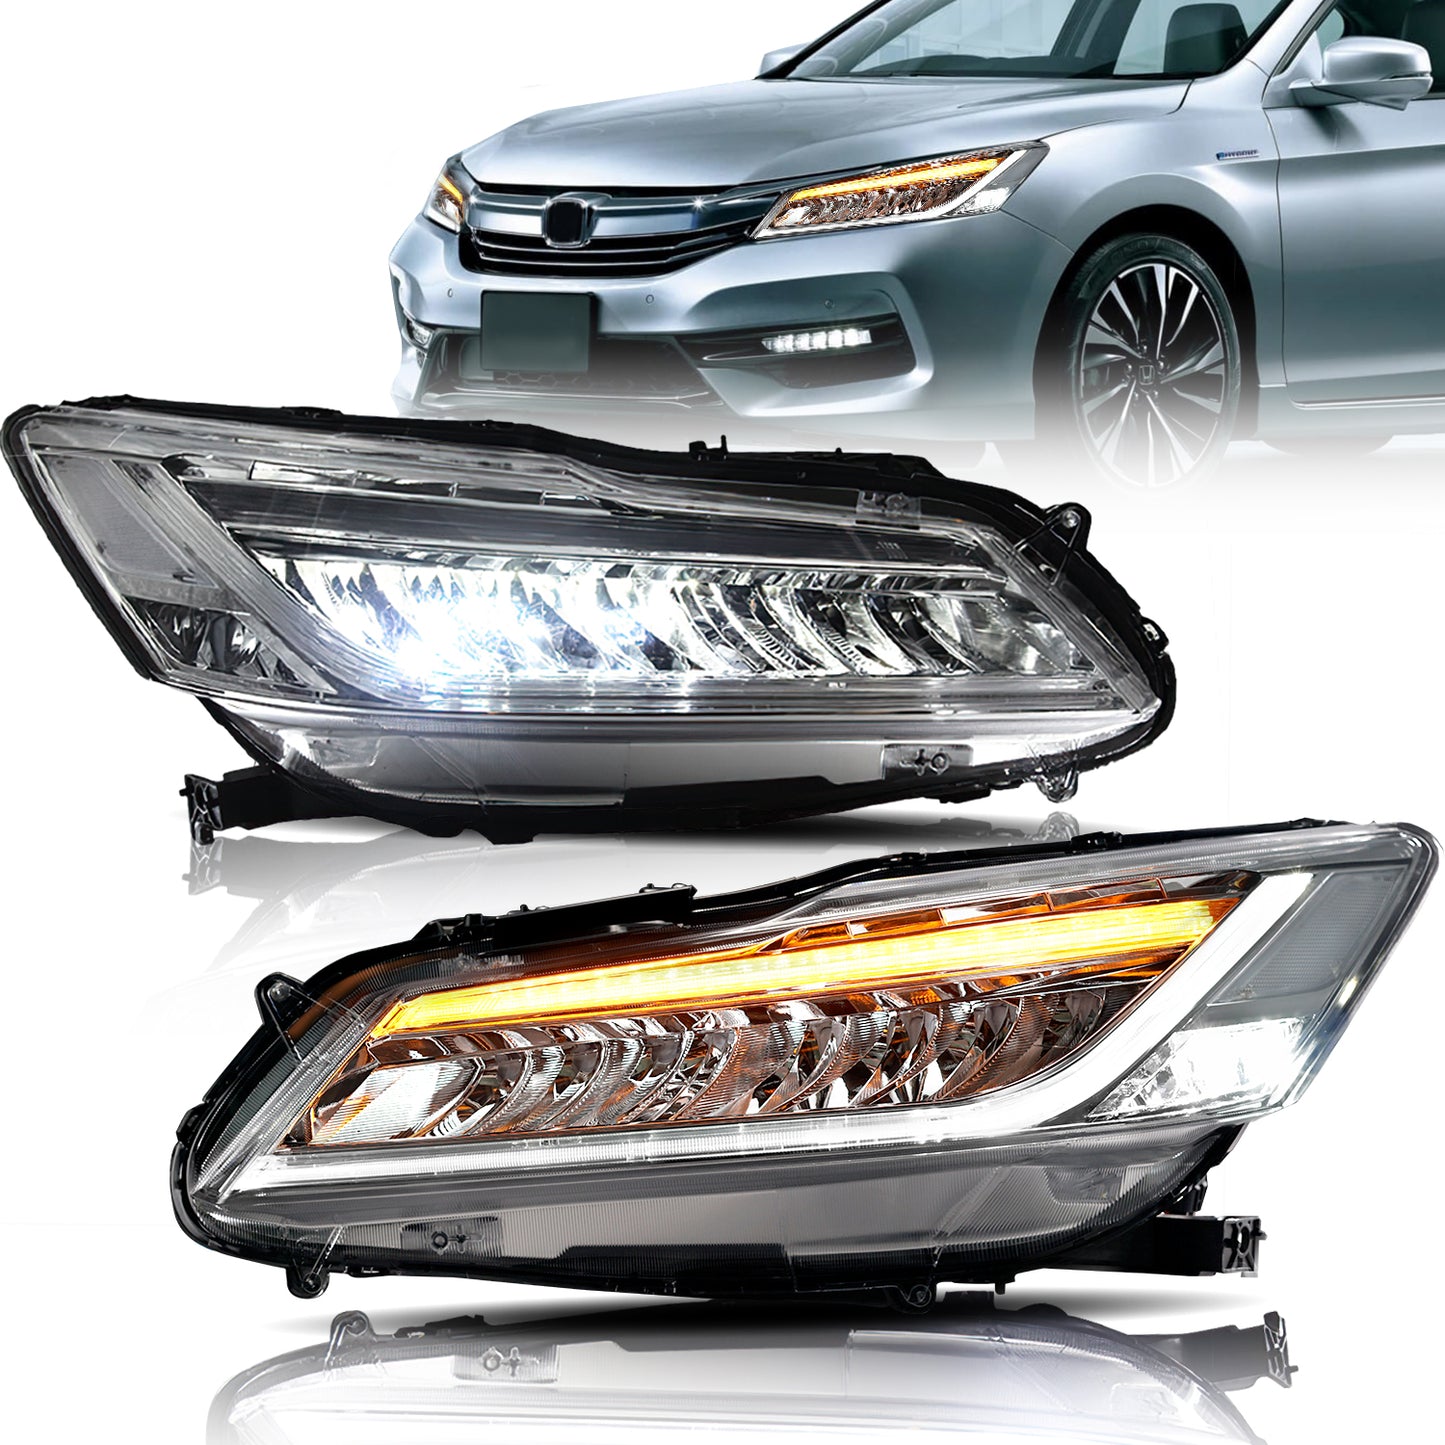 Full LED Headlights Assembly For Honda Accord 2013-2017